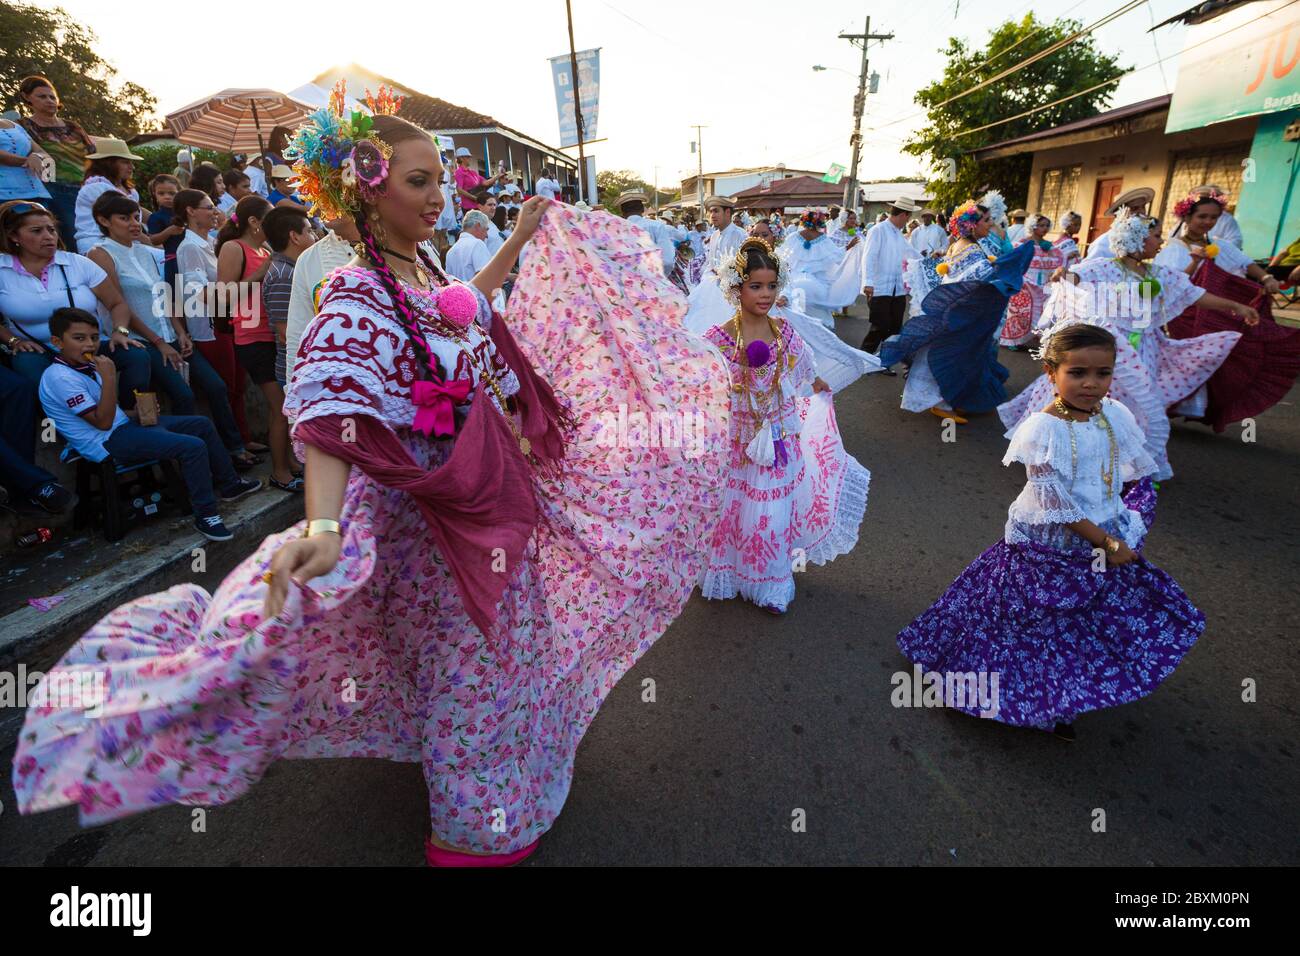 Donne in polline durante l'evento annuale 'El desfile de las mil polleras' (migliaia di polline) a Las Tablas, provincia di Los Santos, Repubblica di Panama. Foto Stock